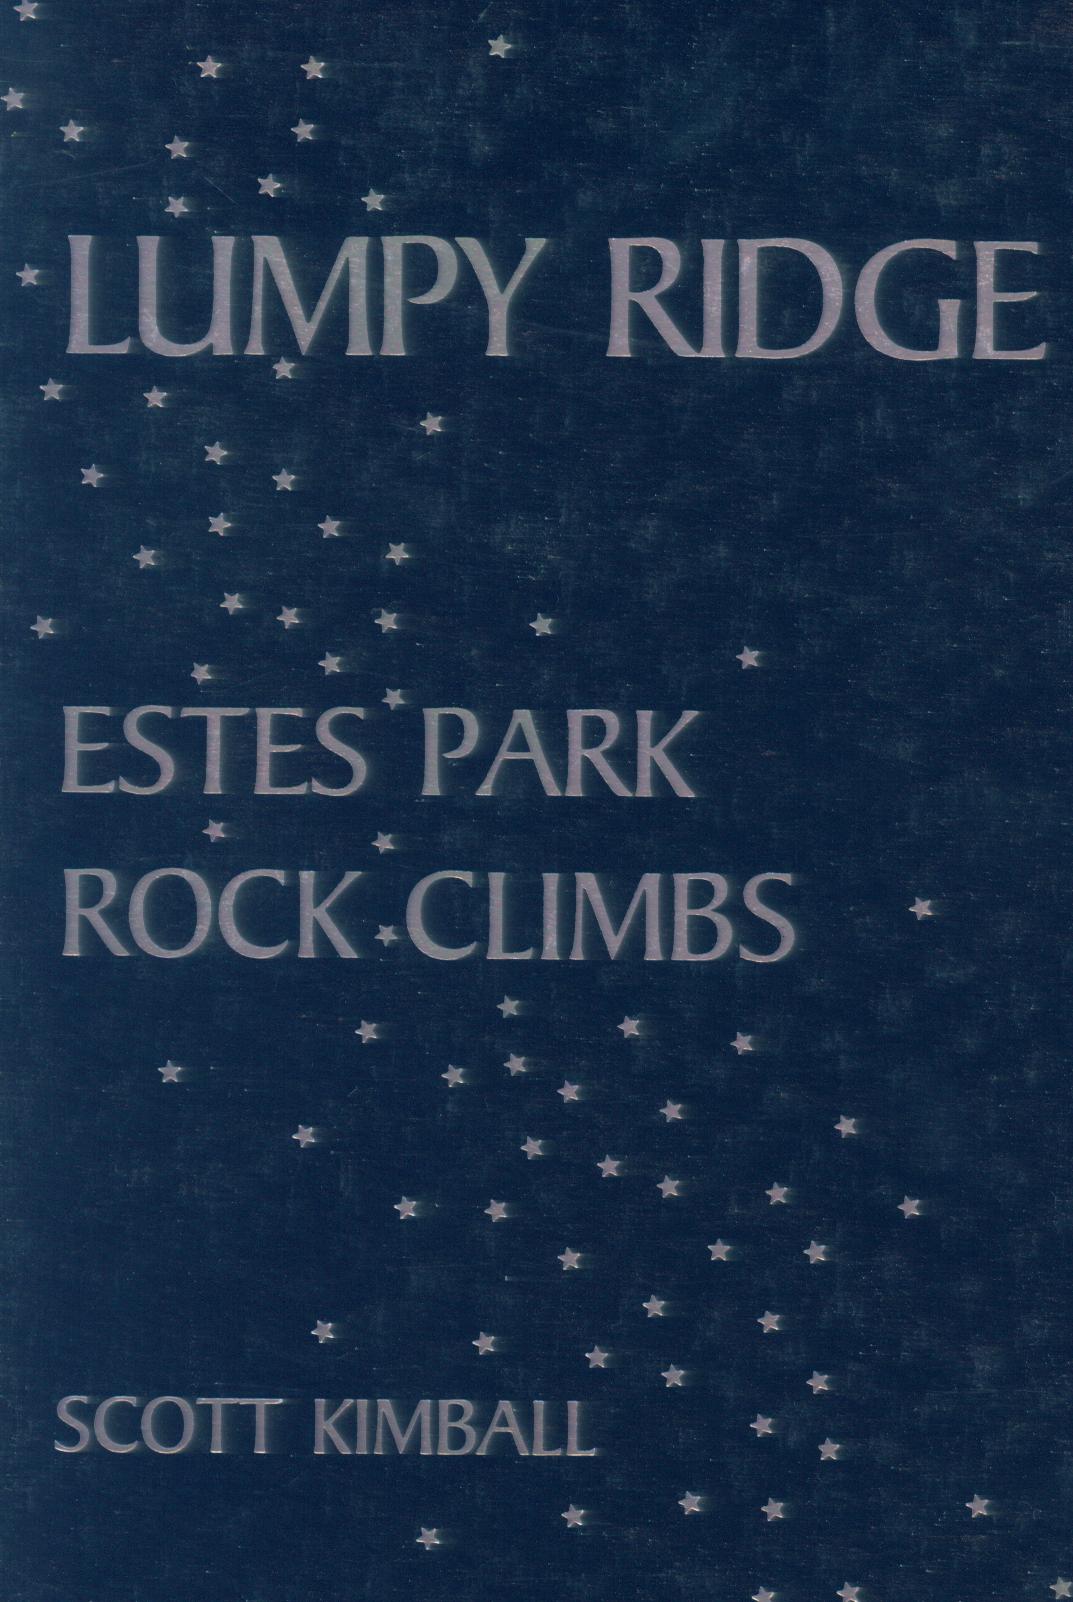 LUMPY RIDGE and ESTES PARK ROCK CLIMBS.